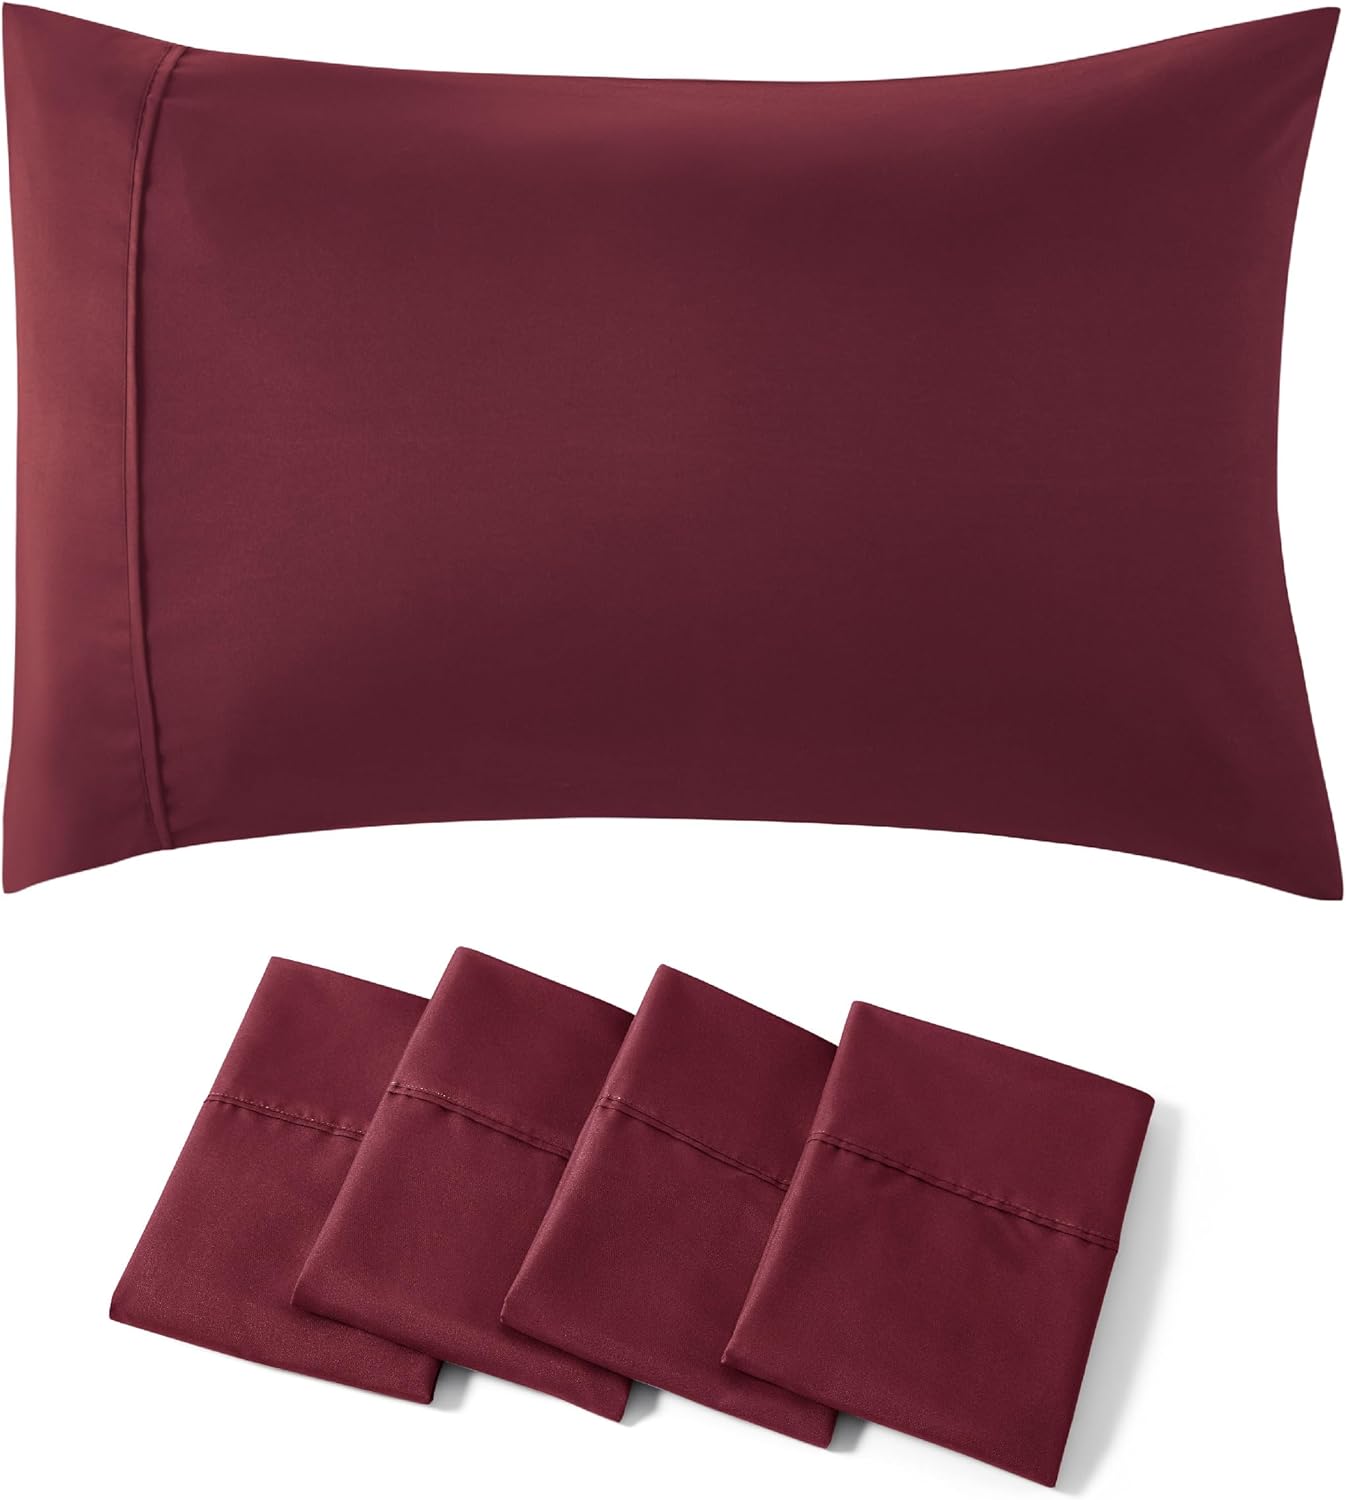 Bedsure Pillow Cases